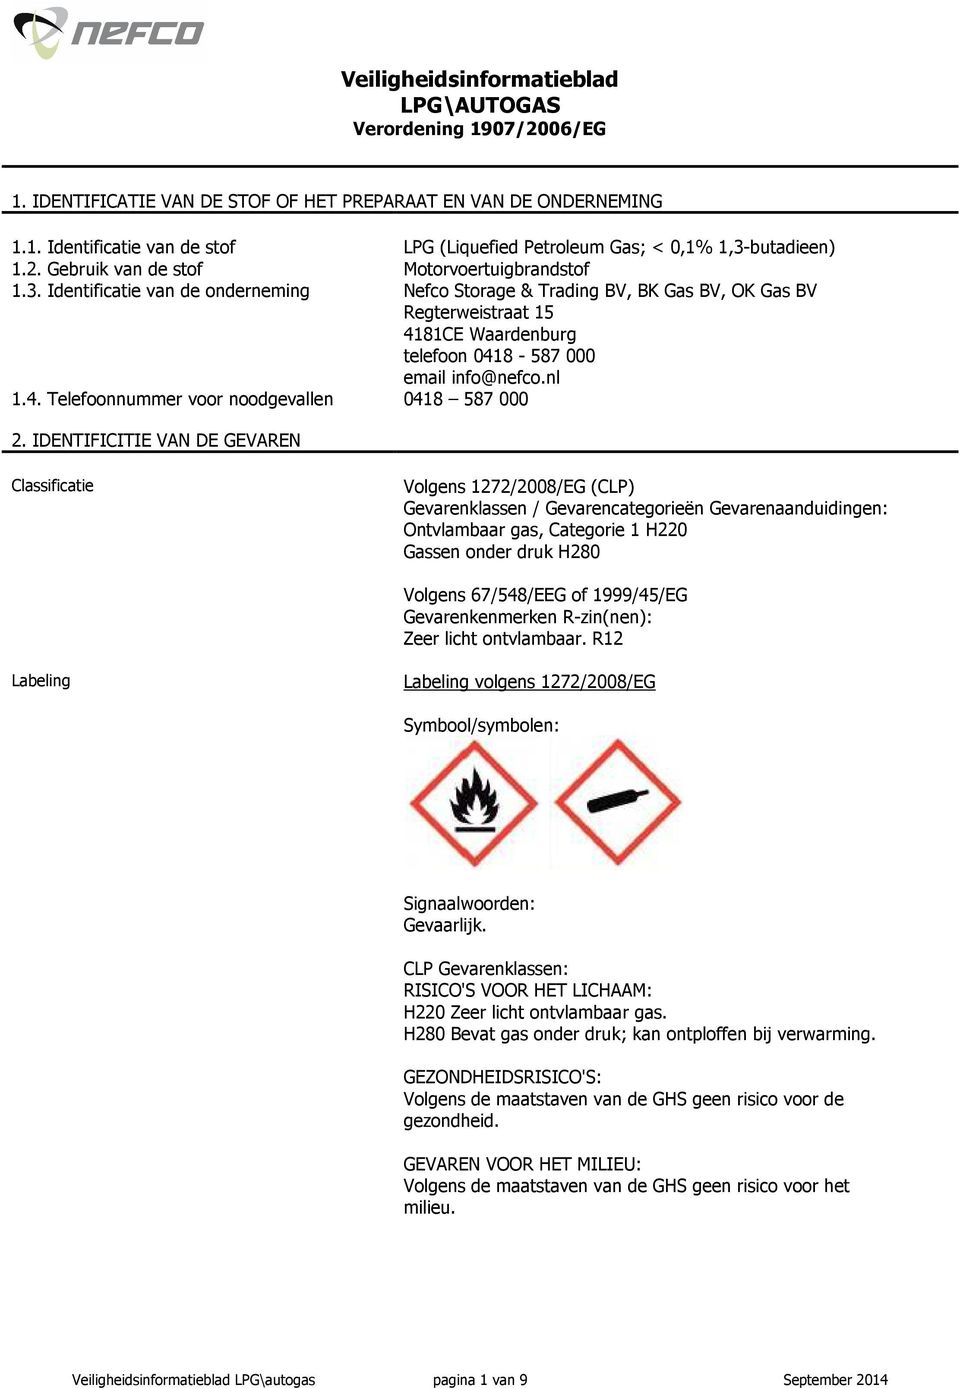 Identificatie van de onderneming Nefco Storage & Trading BV, BK Gas BV, OK Gas BV Regterweistraat 15 4181CE Waardenburg telefoon 0418-587 000 email info@nefco.nl 1.4. Telefoonnummer voor noodgevallen 0418 587 000 2.